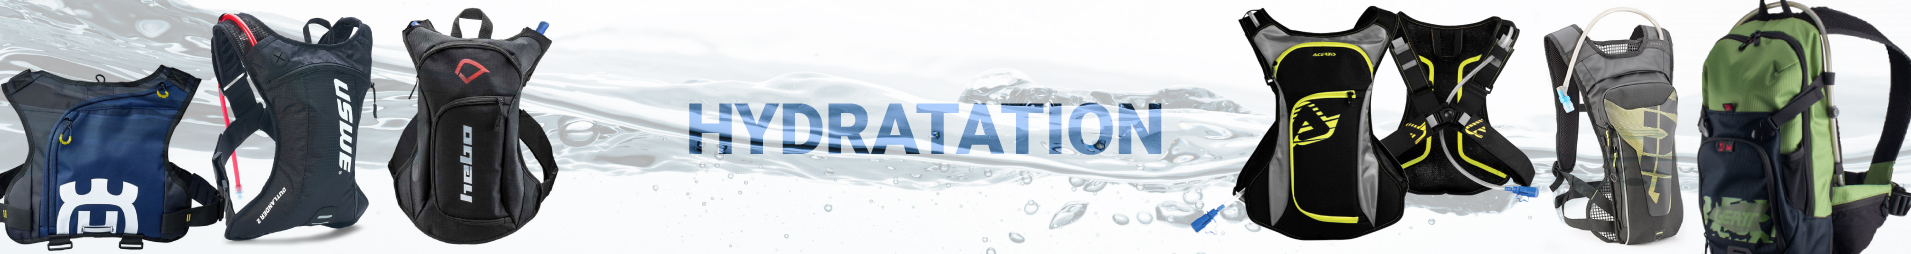 Hidratacion